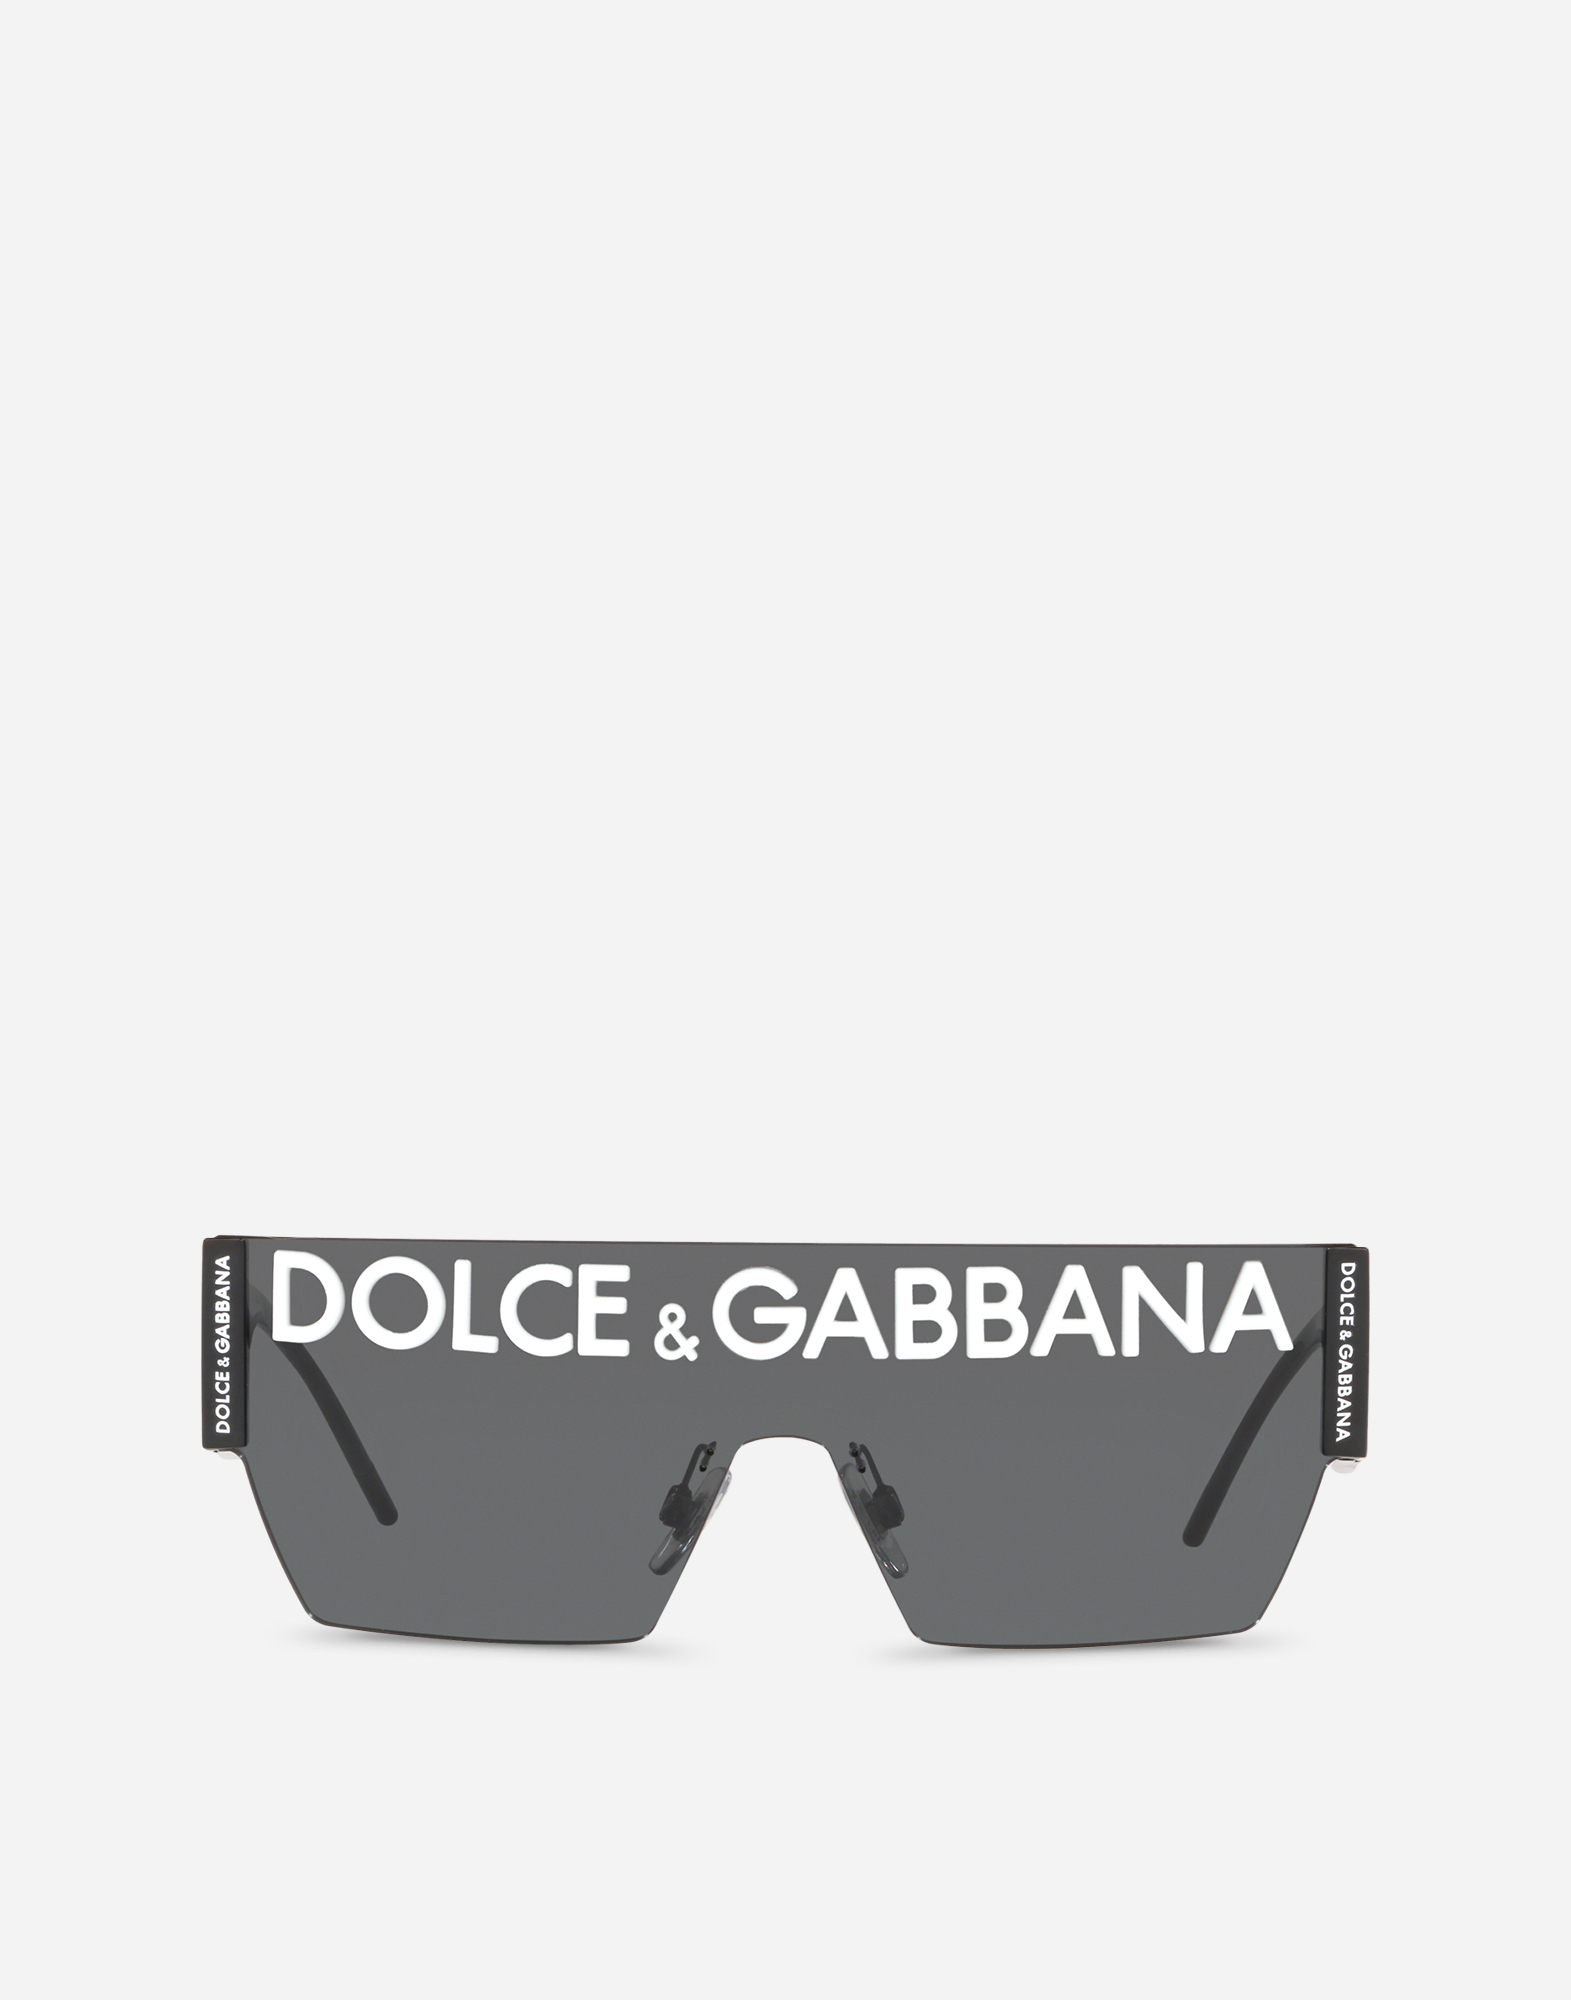 dolce gabbana mens sunglasses for sale